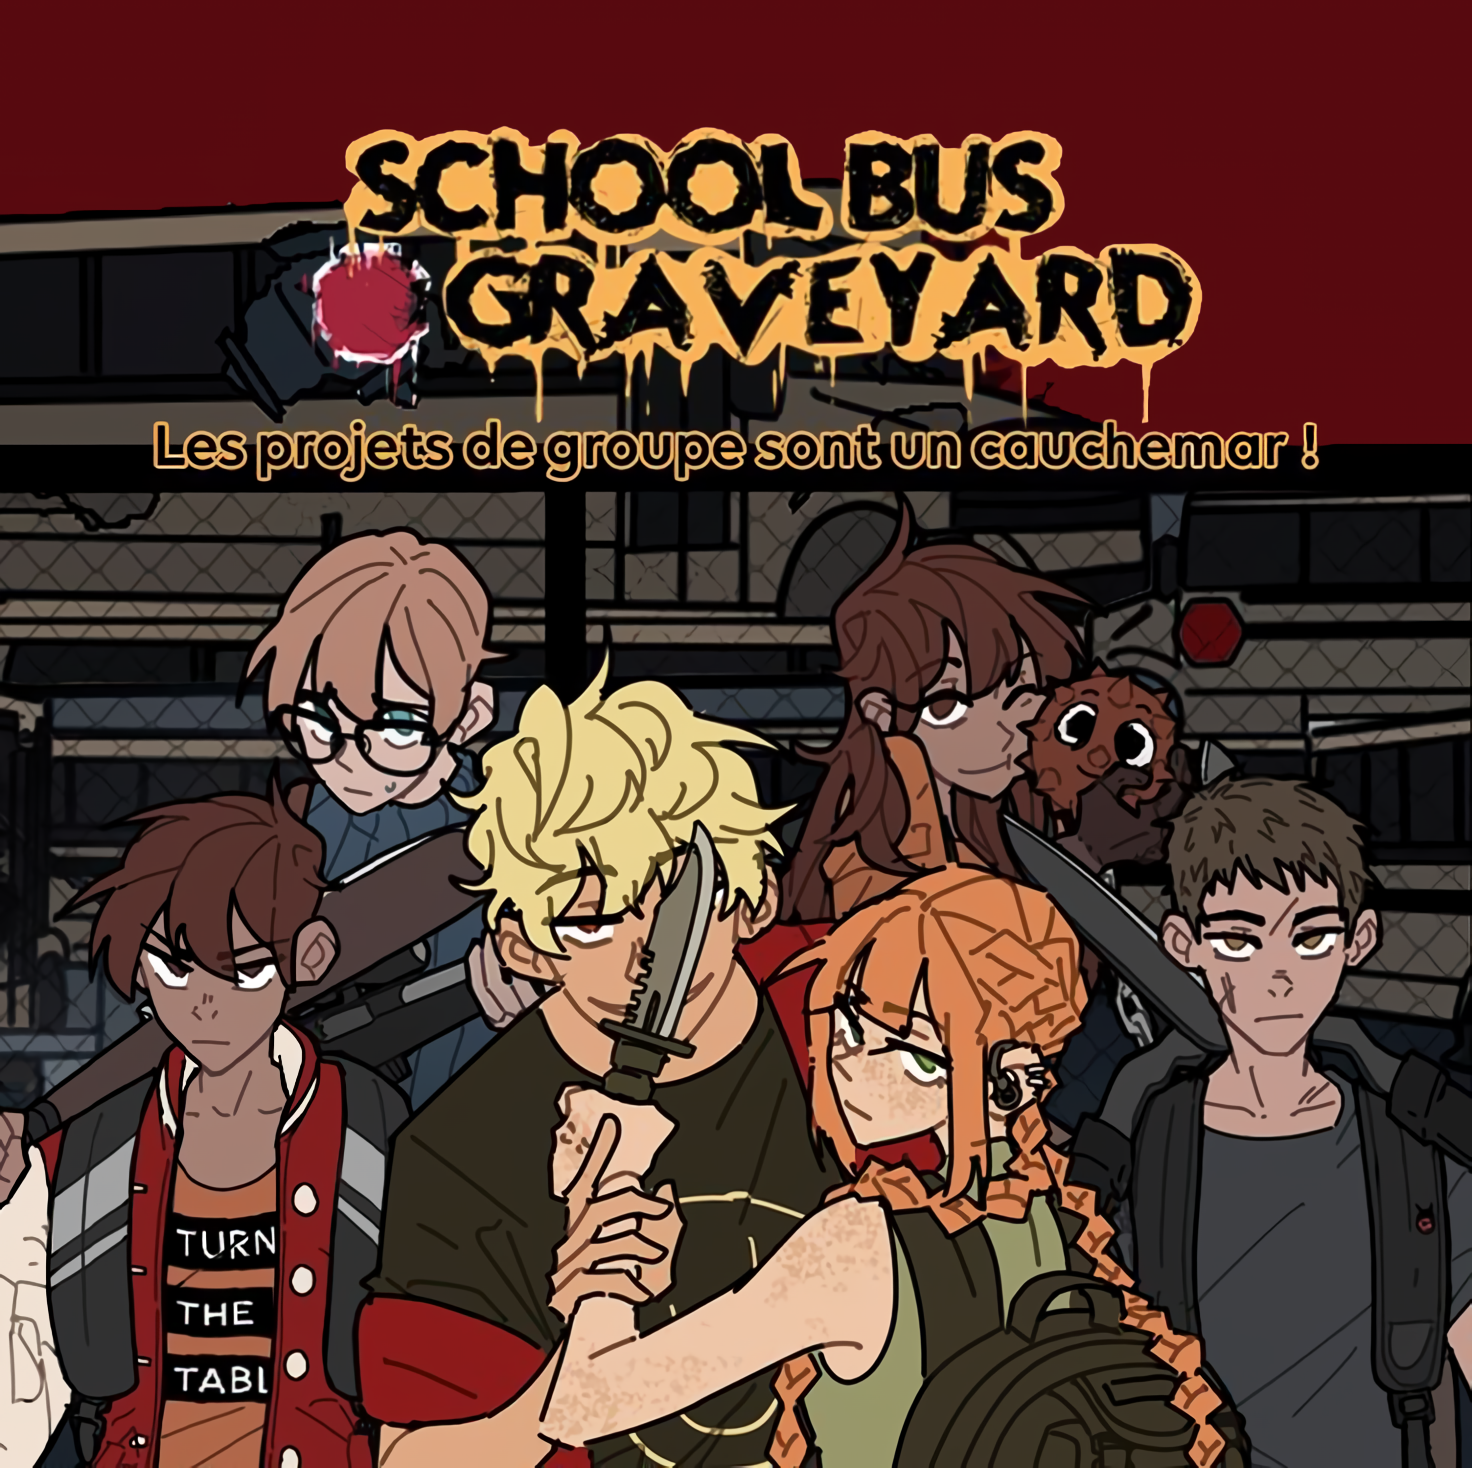 school bus graveyardc_waifu2x_art_noise3_scale